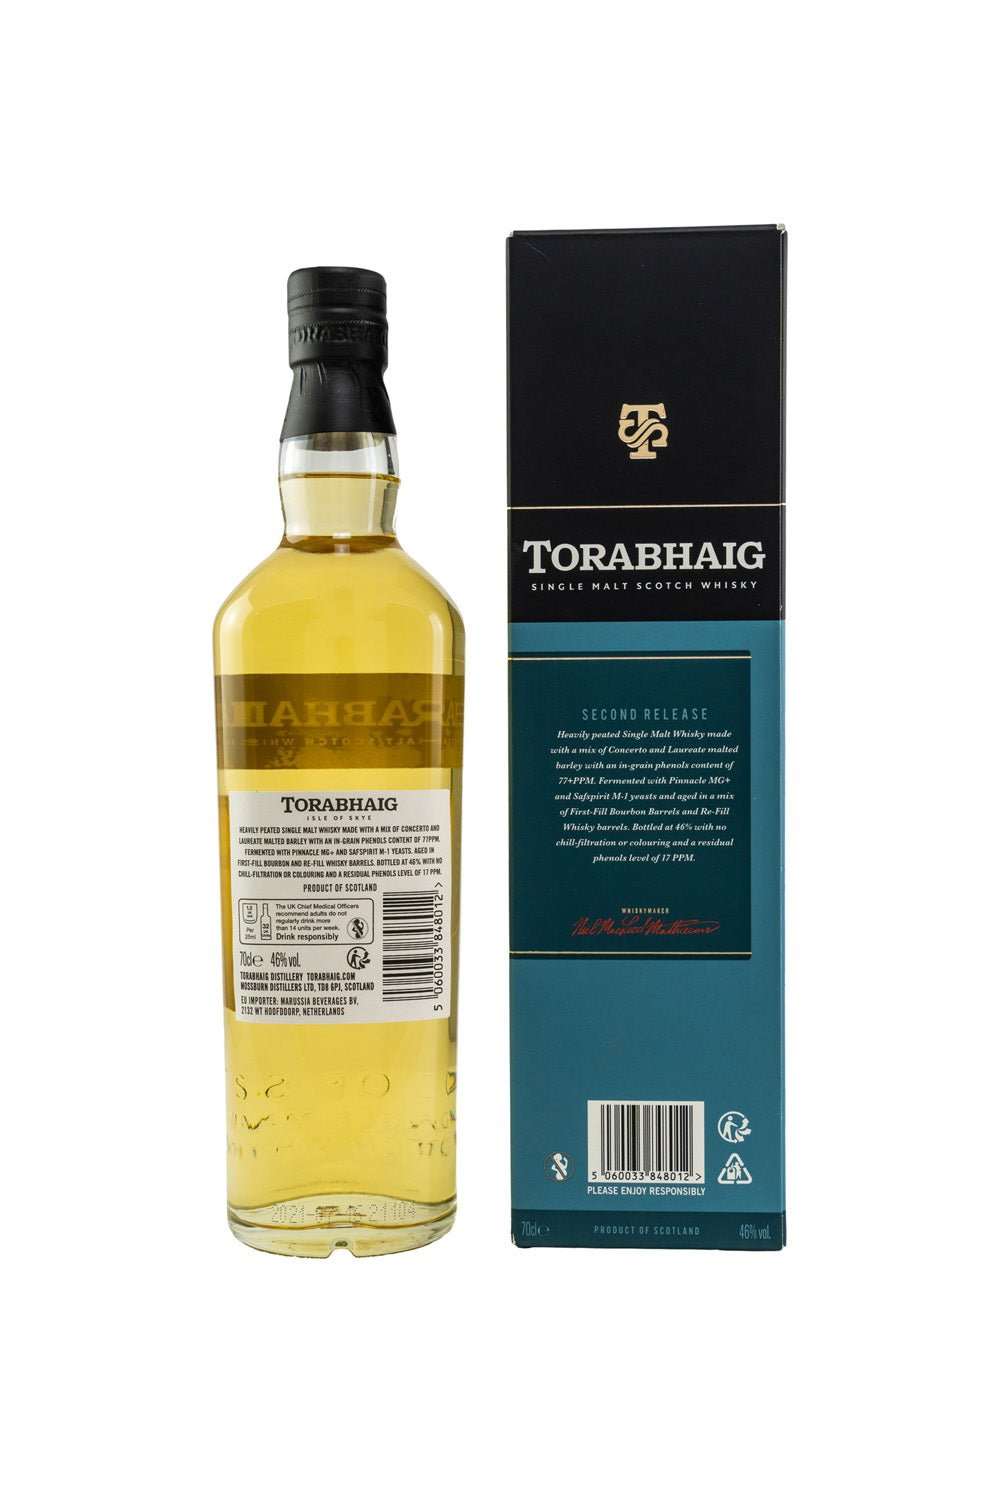 Torabhaig The Legacy Series Allt Gleann Single Malt Whisky 46% vol. 700ml - Maltimore